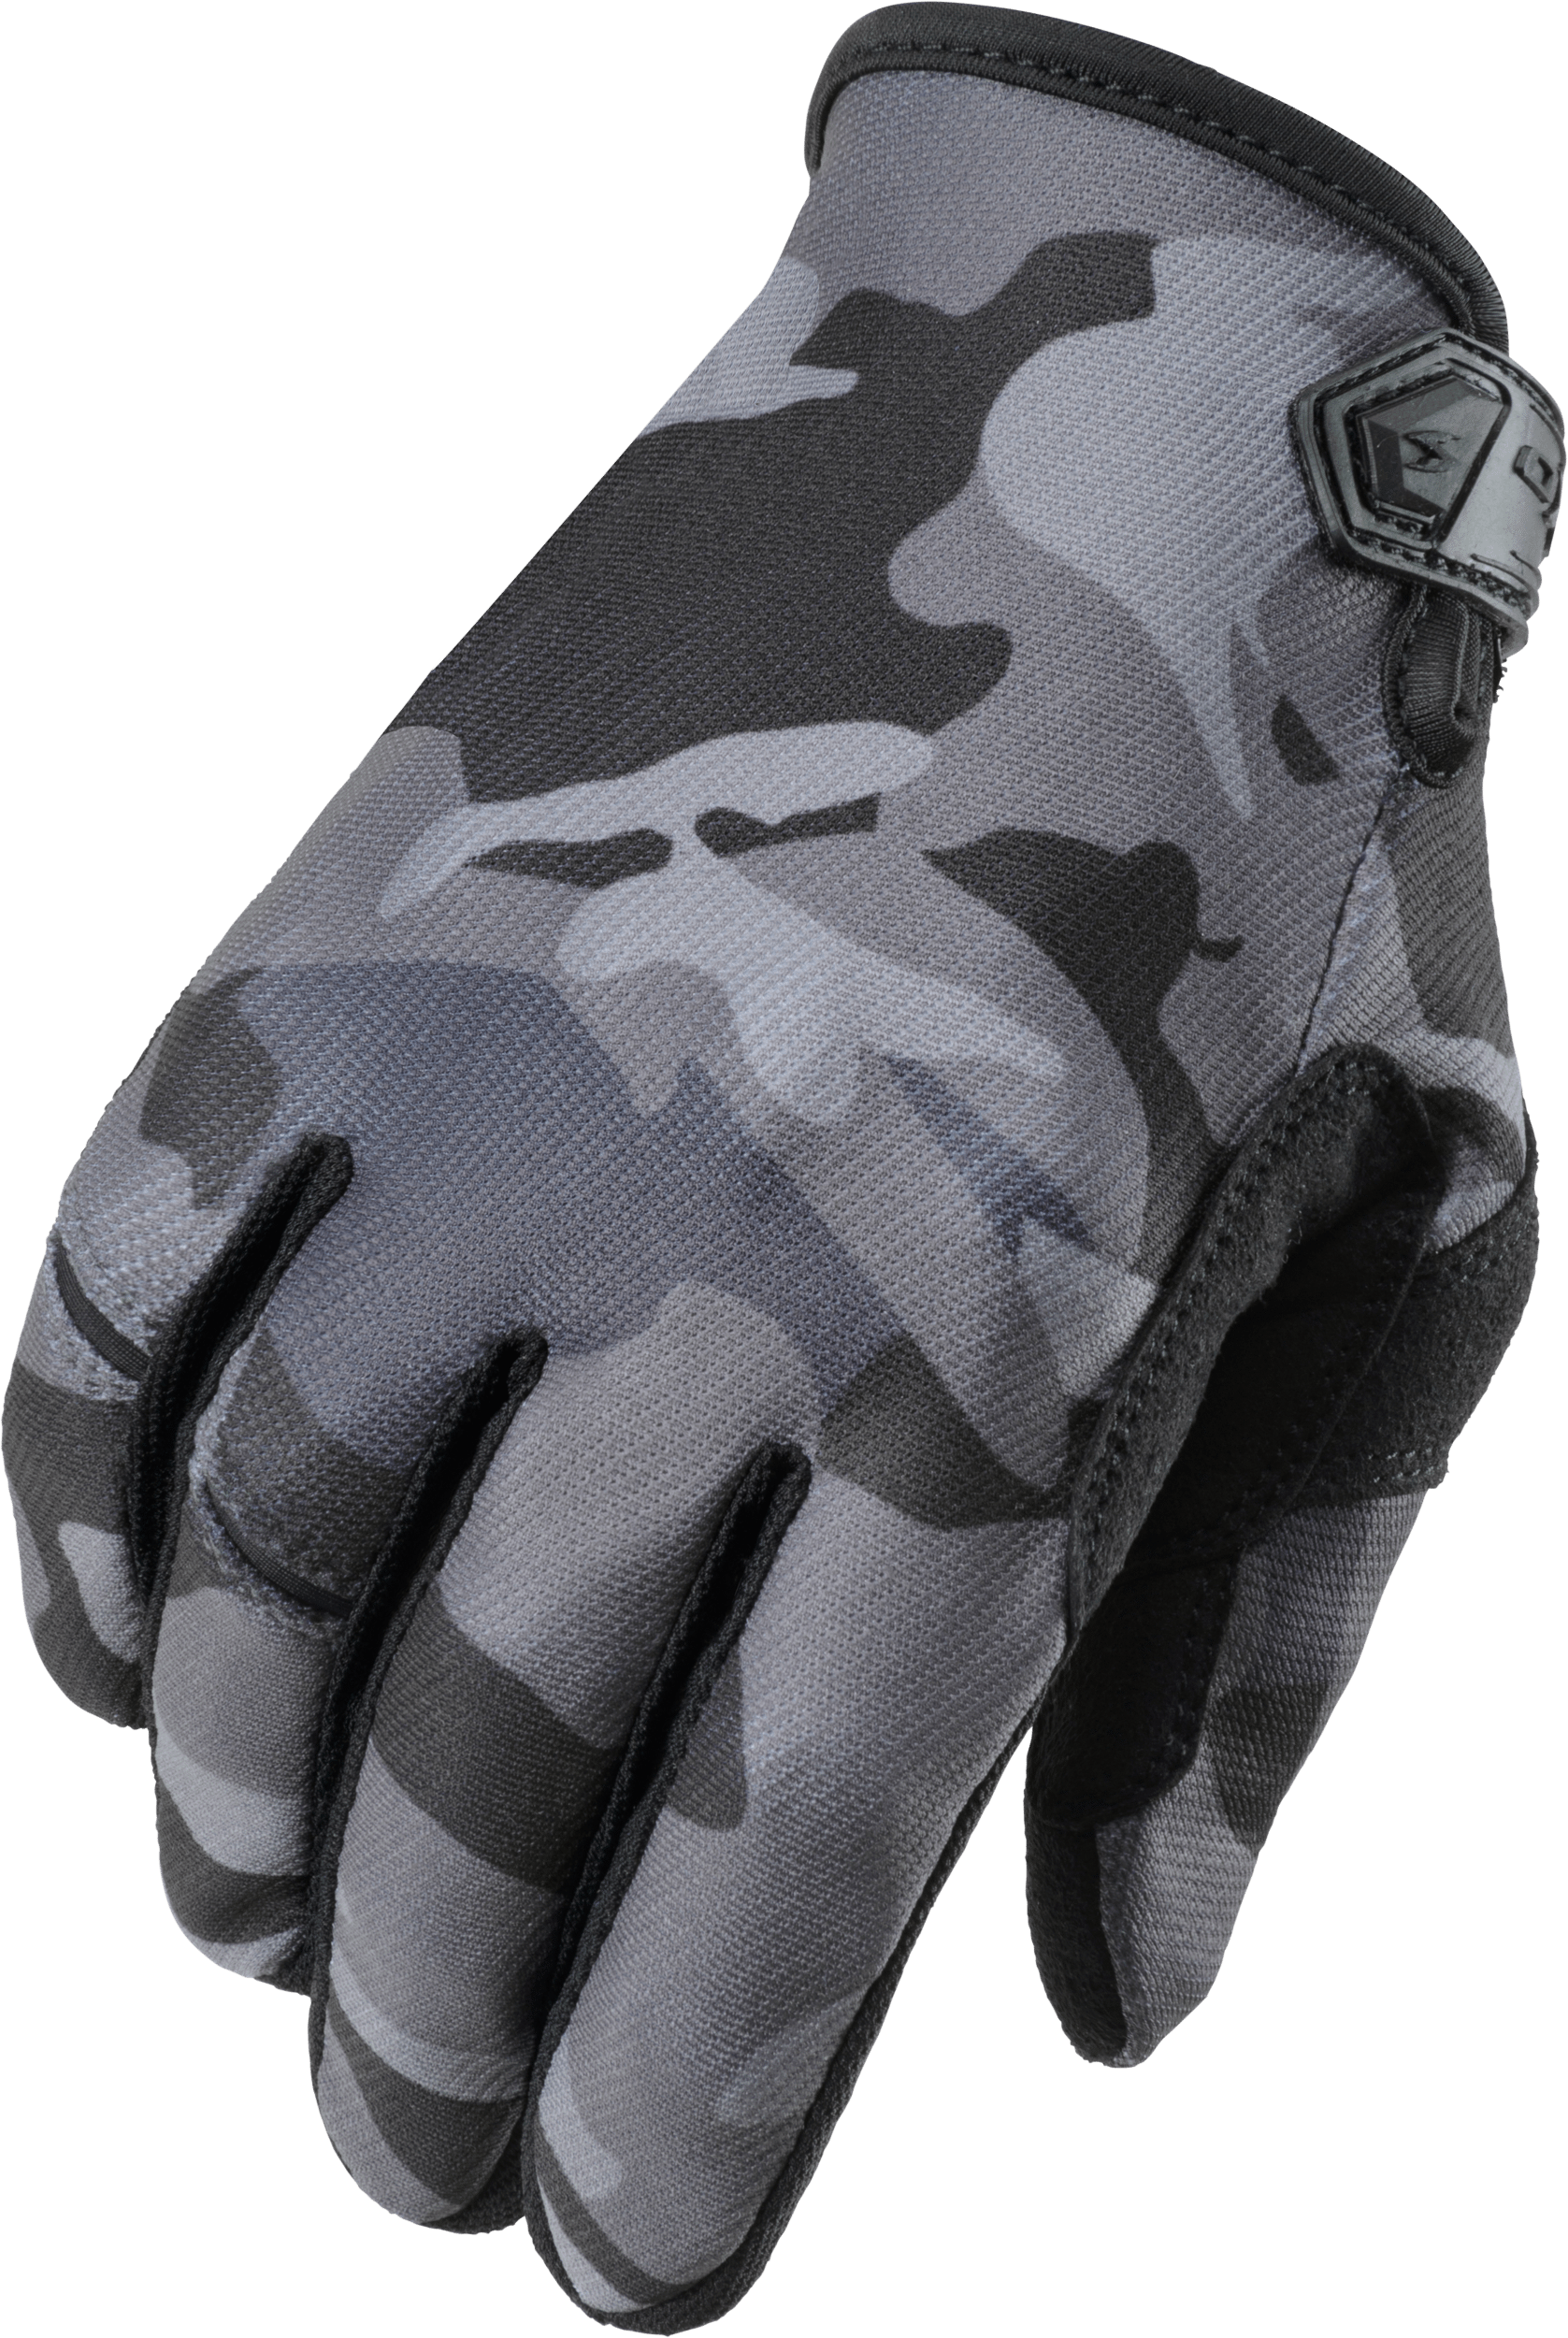 Western Powersports Gloves Stealth / 3X-Large Moto-Flex Gloves by Scorpion Exo G70-038